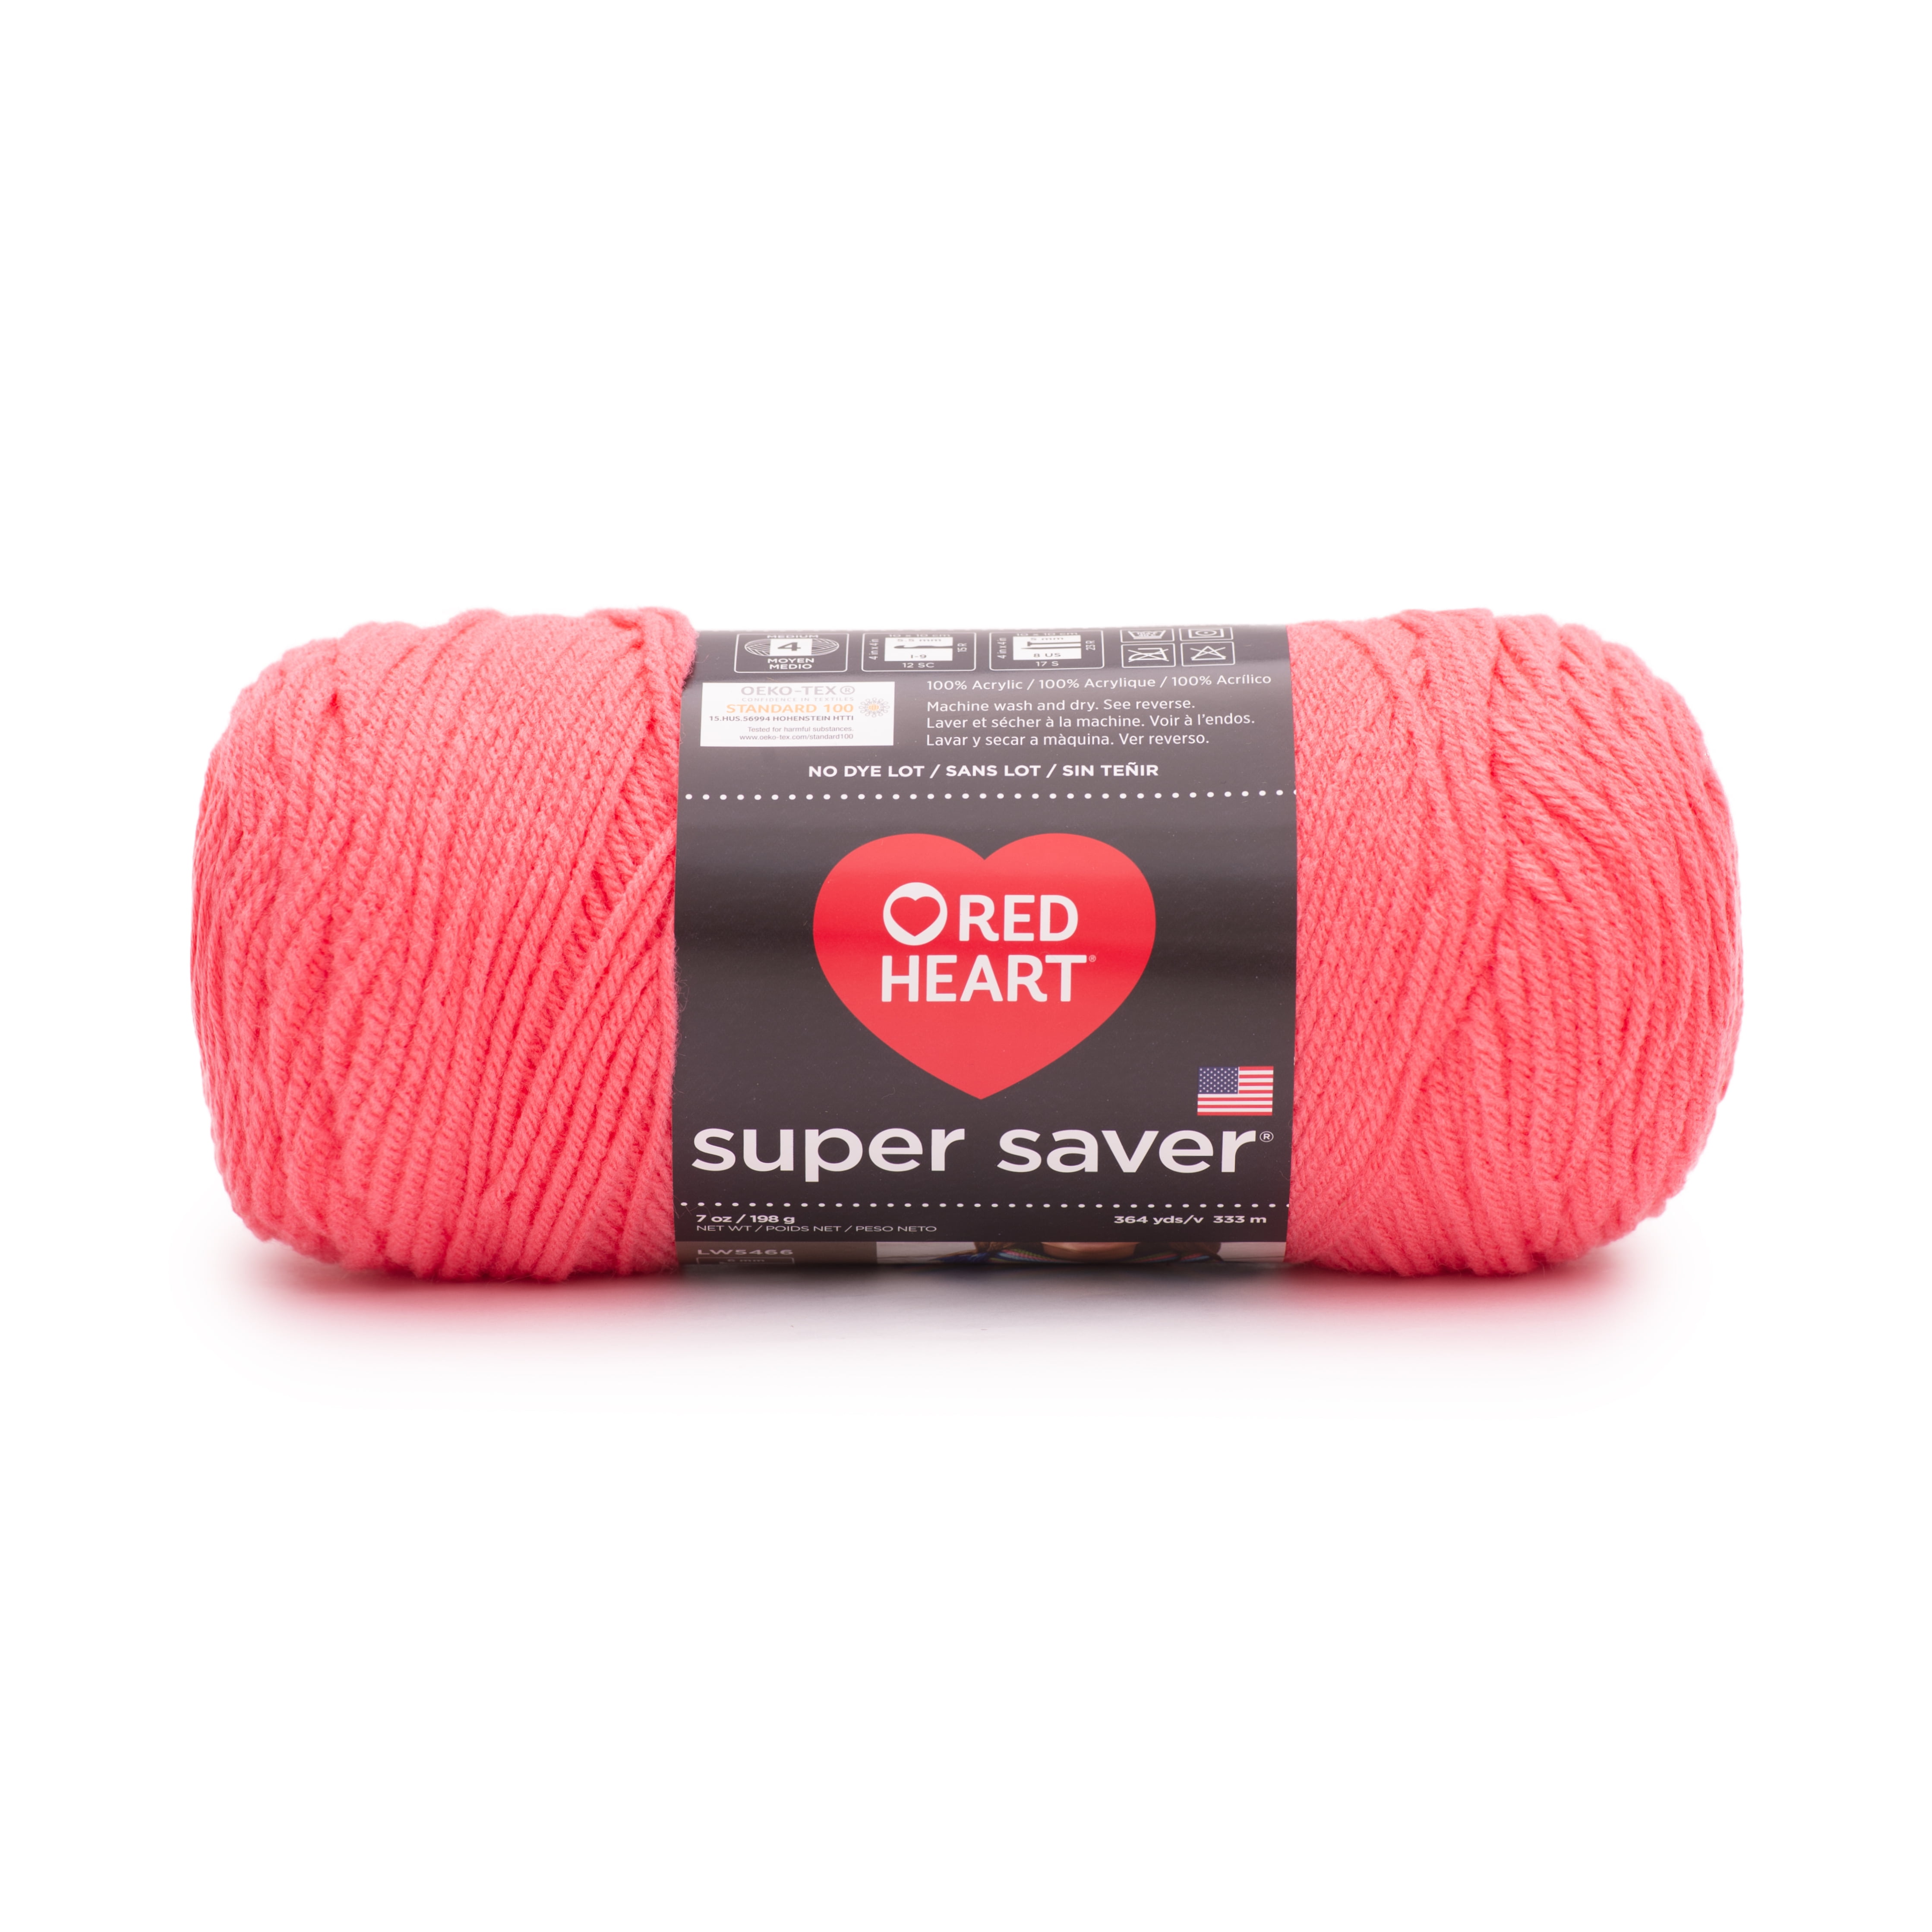 Red Heart Super Saver 4 Medium Acrylic Yarn, Persimmon 7oz/198g, 364 Yards